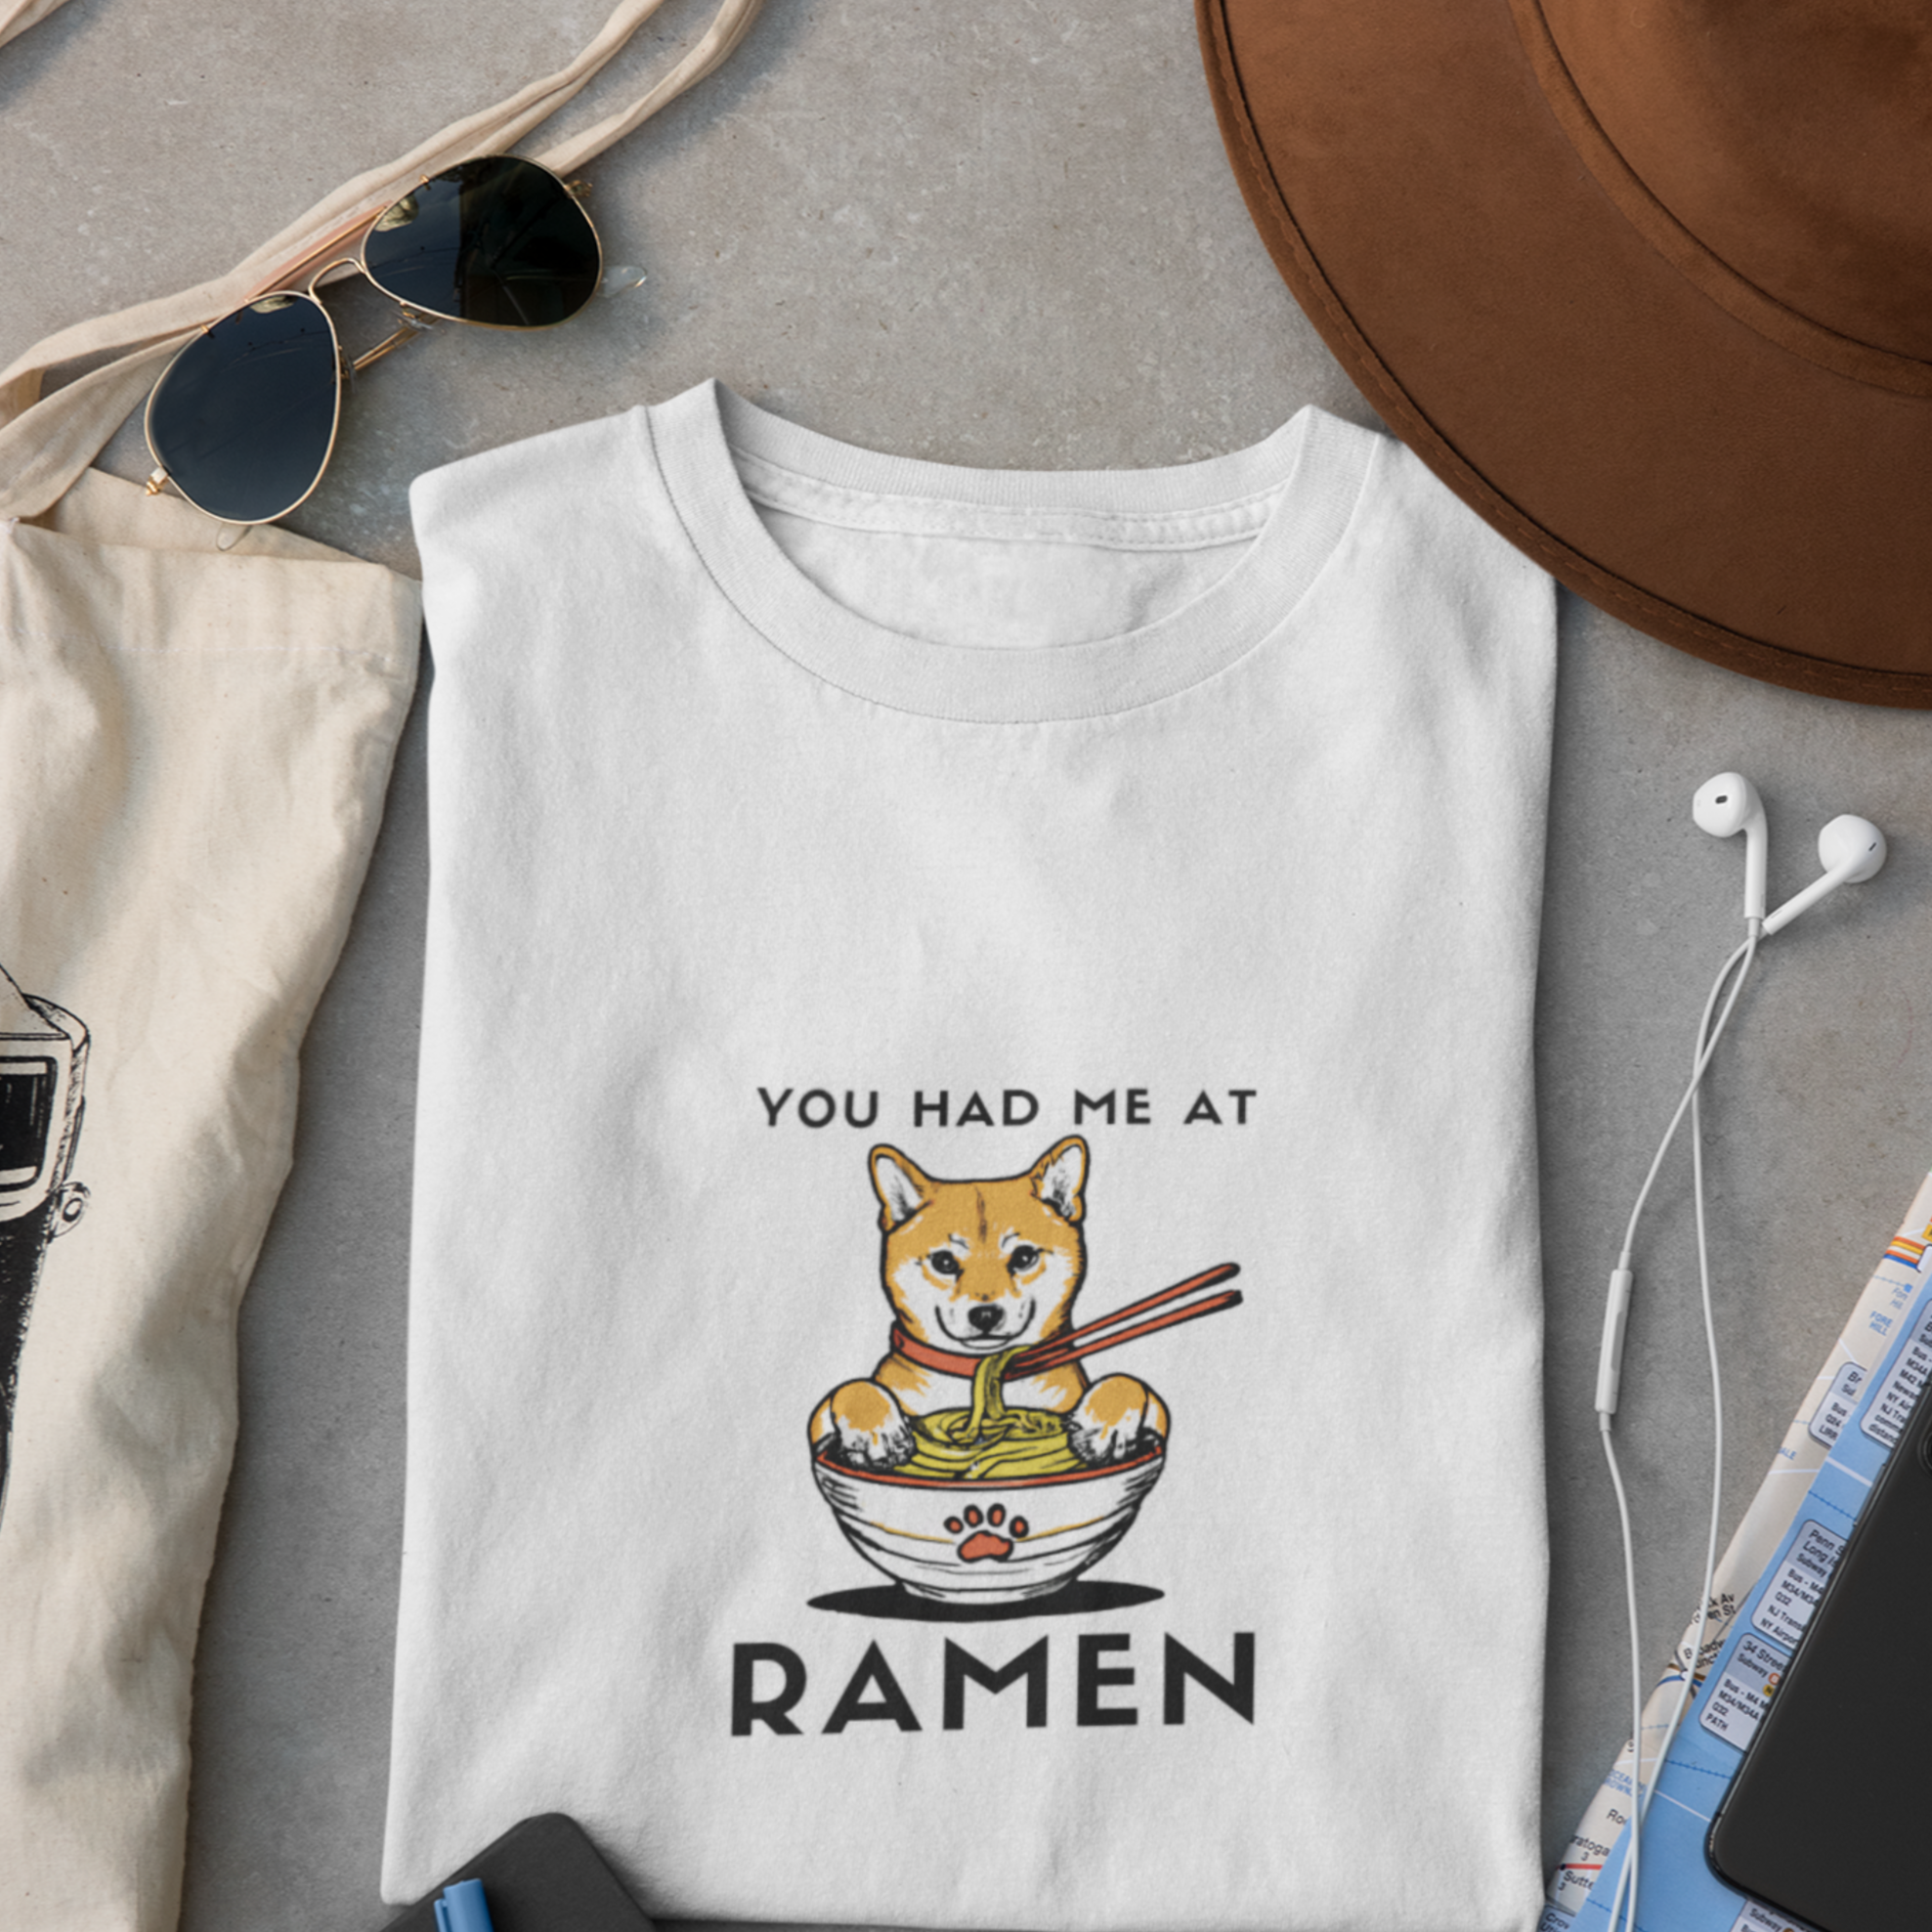 Ramen T-shirt with Shiba Inu Illustration: You Had Me at Ramen - Japanese Foodie Shirt for Ramen Art Fans